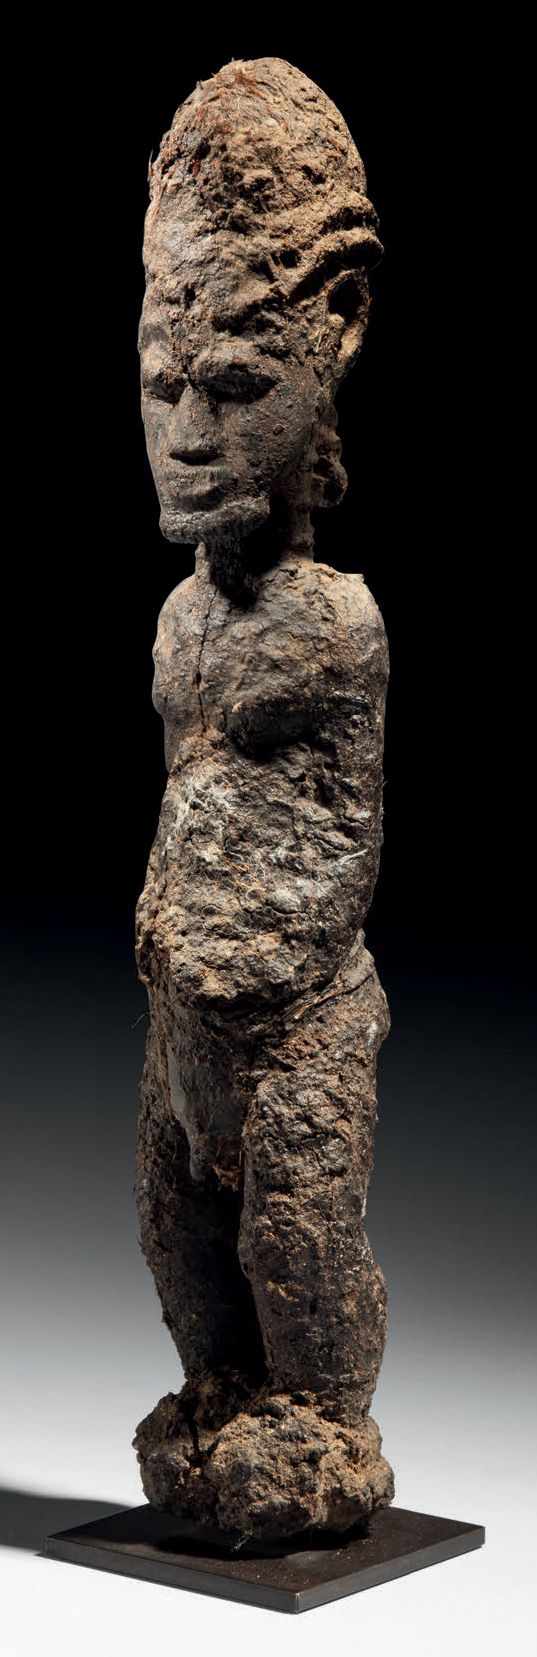 Null - ESTATUA BAULE, COSTA DE MARFIL
Madera
H. 38 cm
Representa una figura masc&hellip;